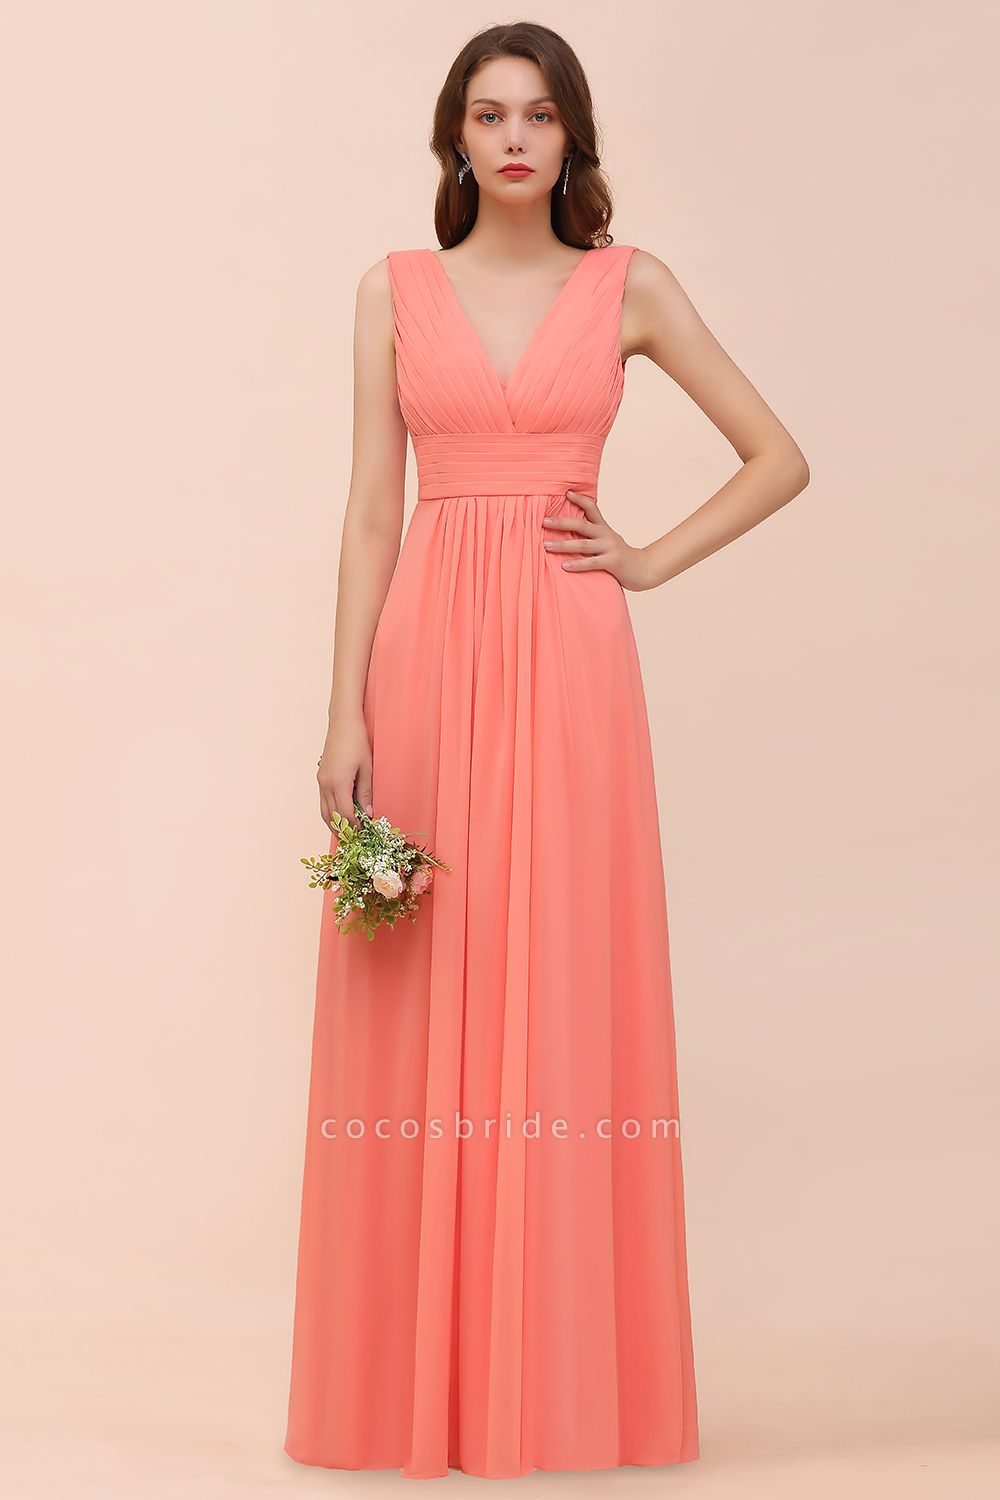 Elegant Long A-line V-Neck Ruffle Coral Chiffon Bridesmaid Dress